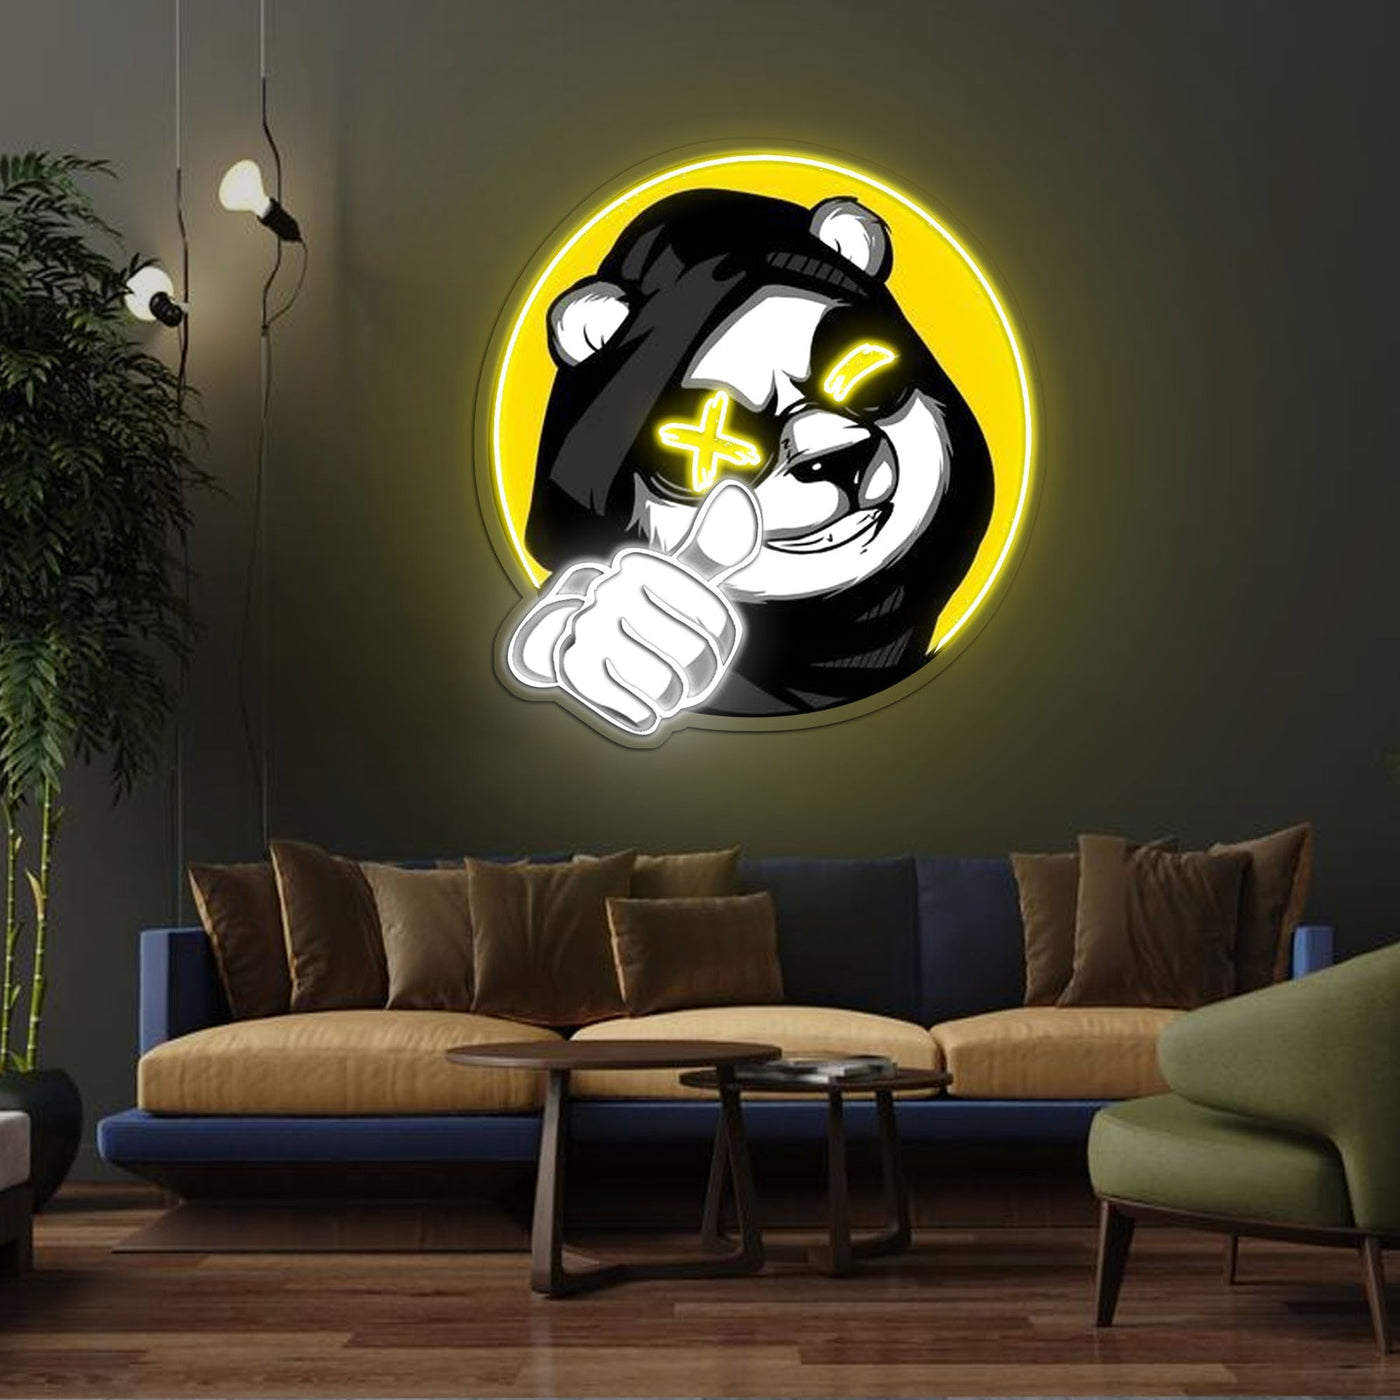 Cool Panda Neon Sign x Acrylic Artwork